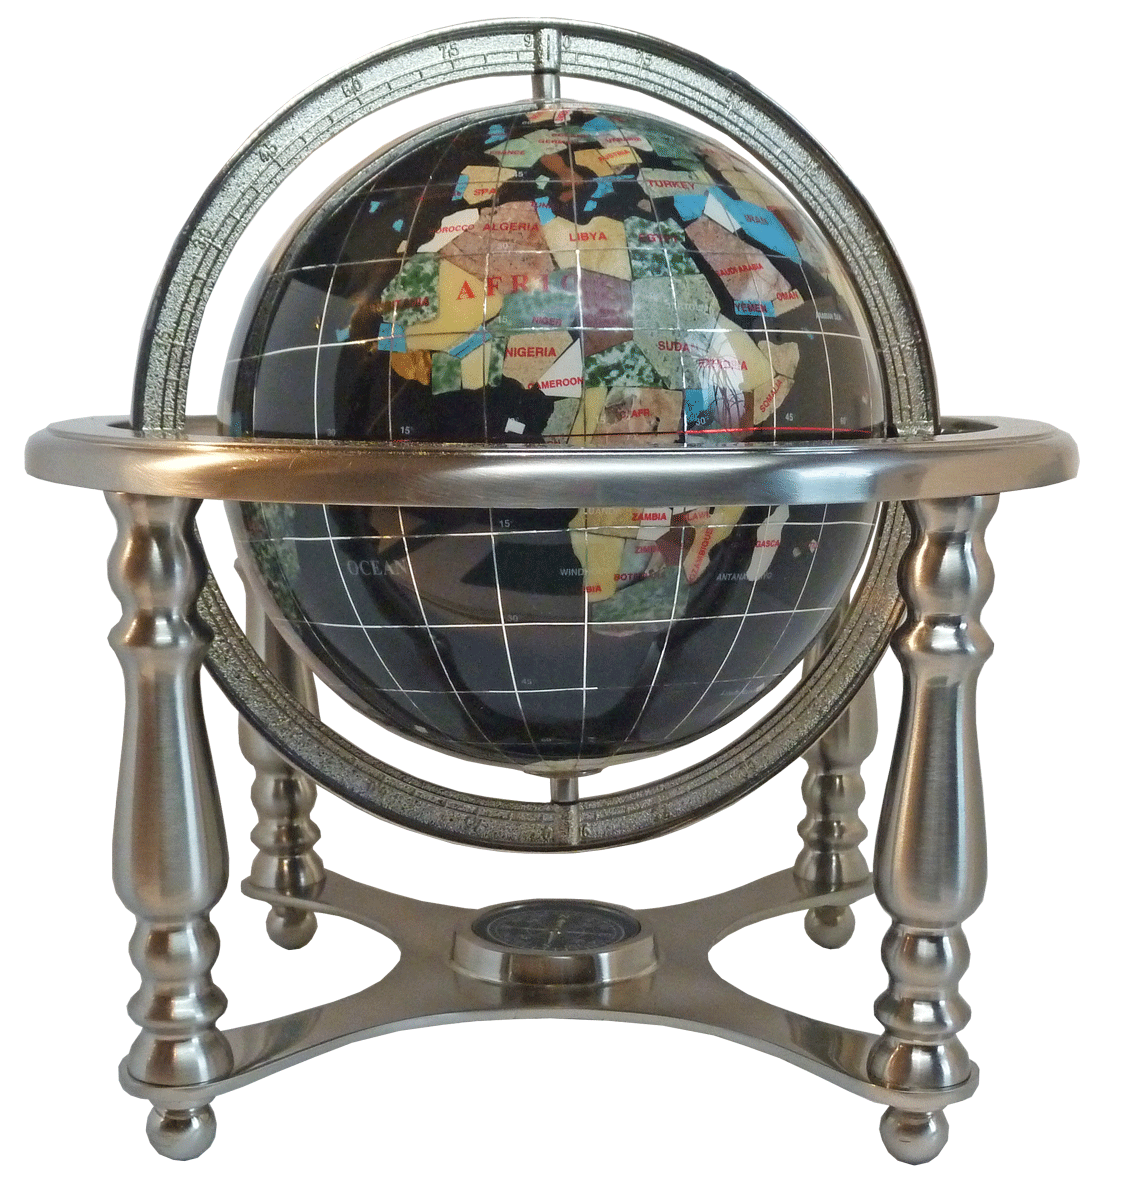 Gemstone globe tabletop 15 cm black onyx 4-legs stand silver finish